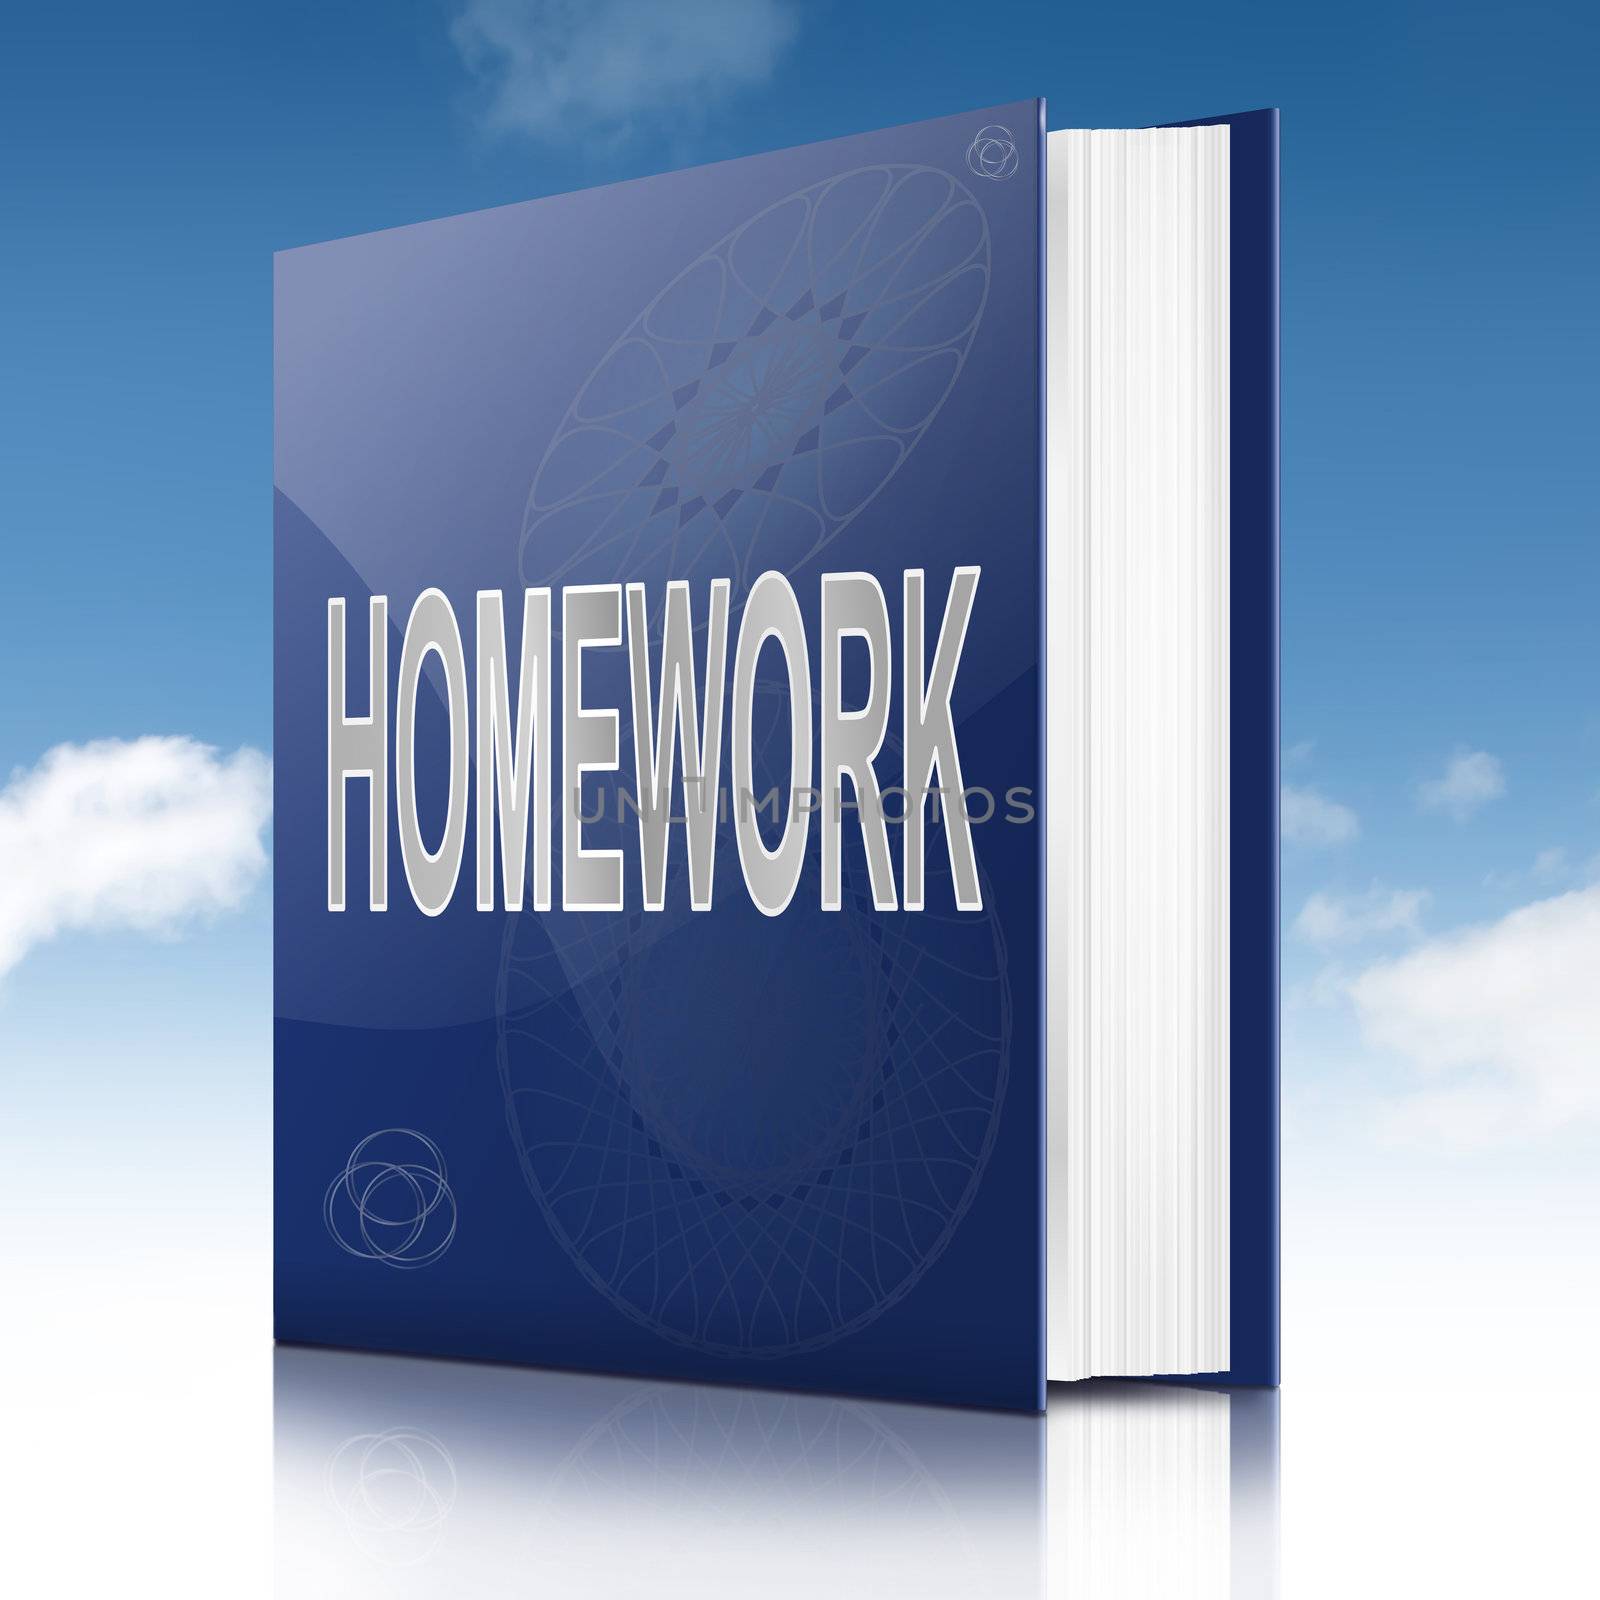 Homework book. by 72soul